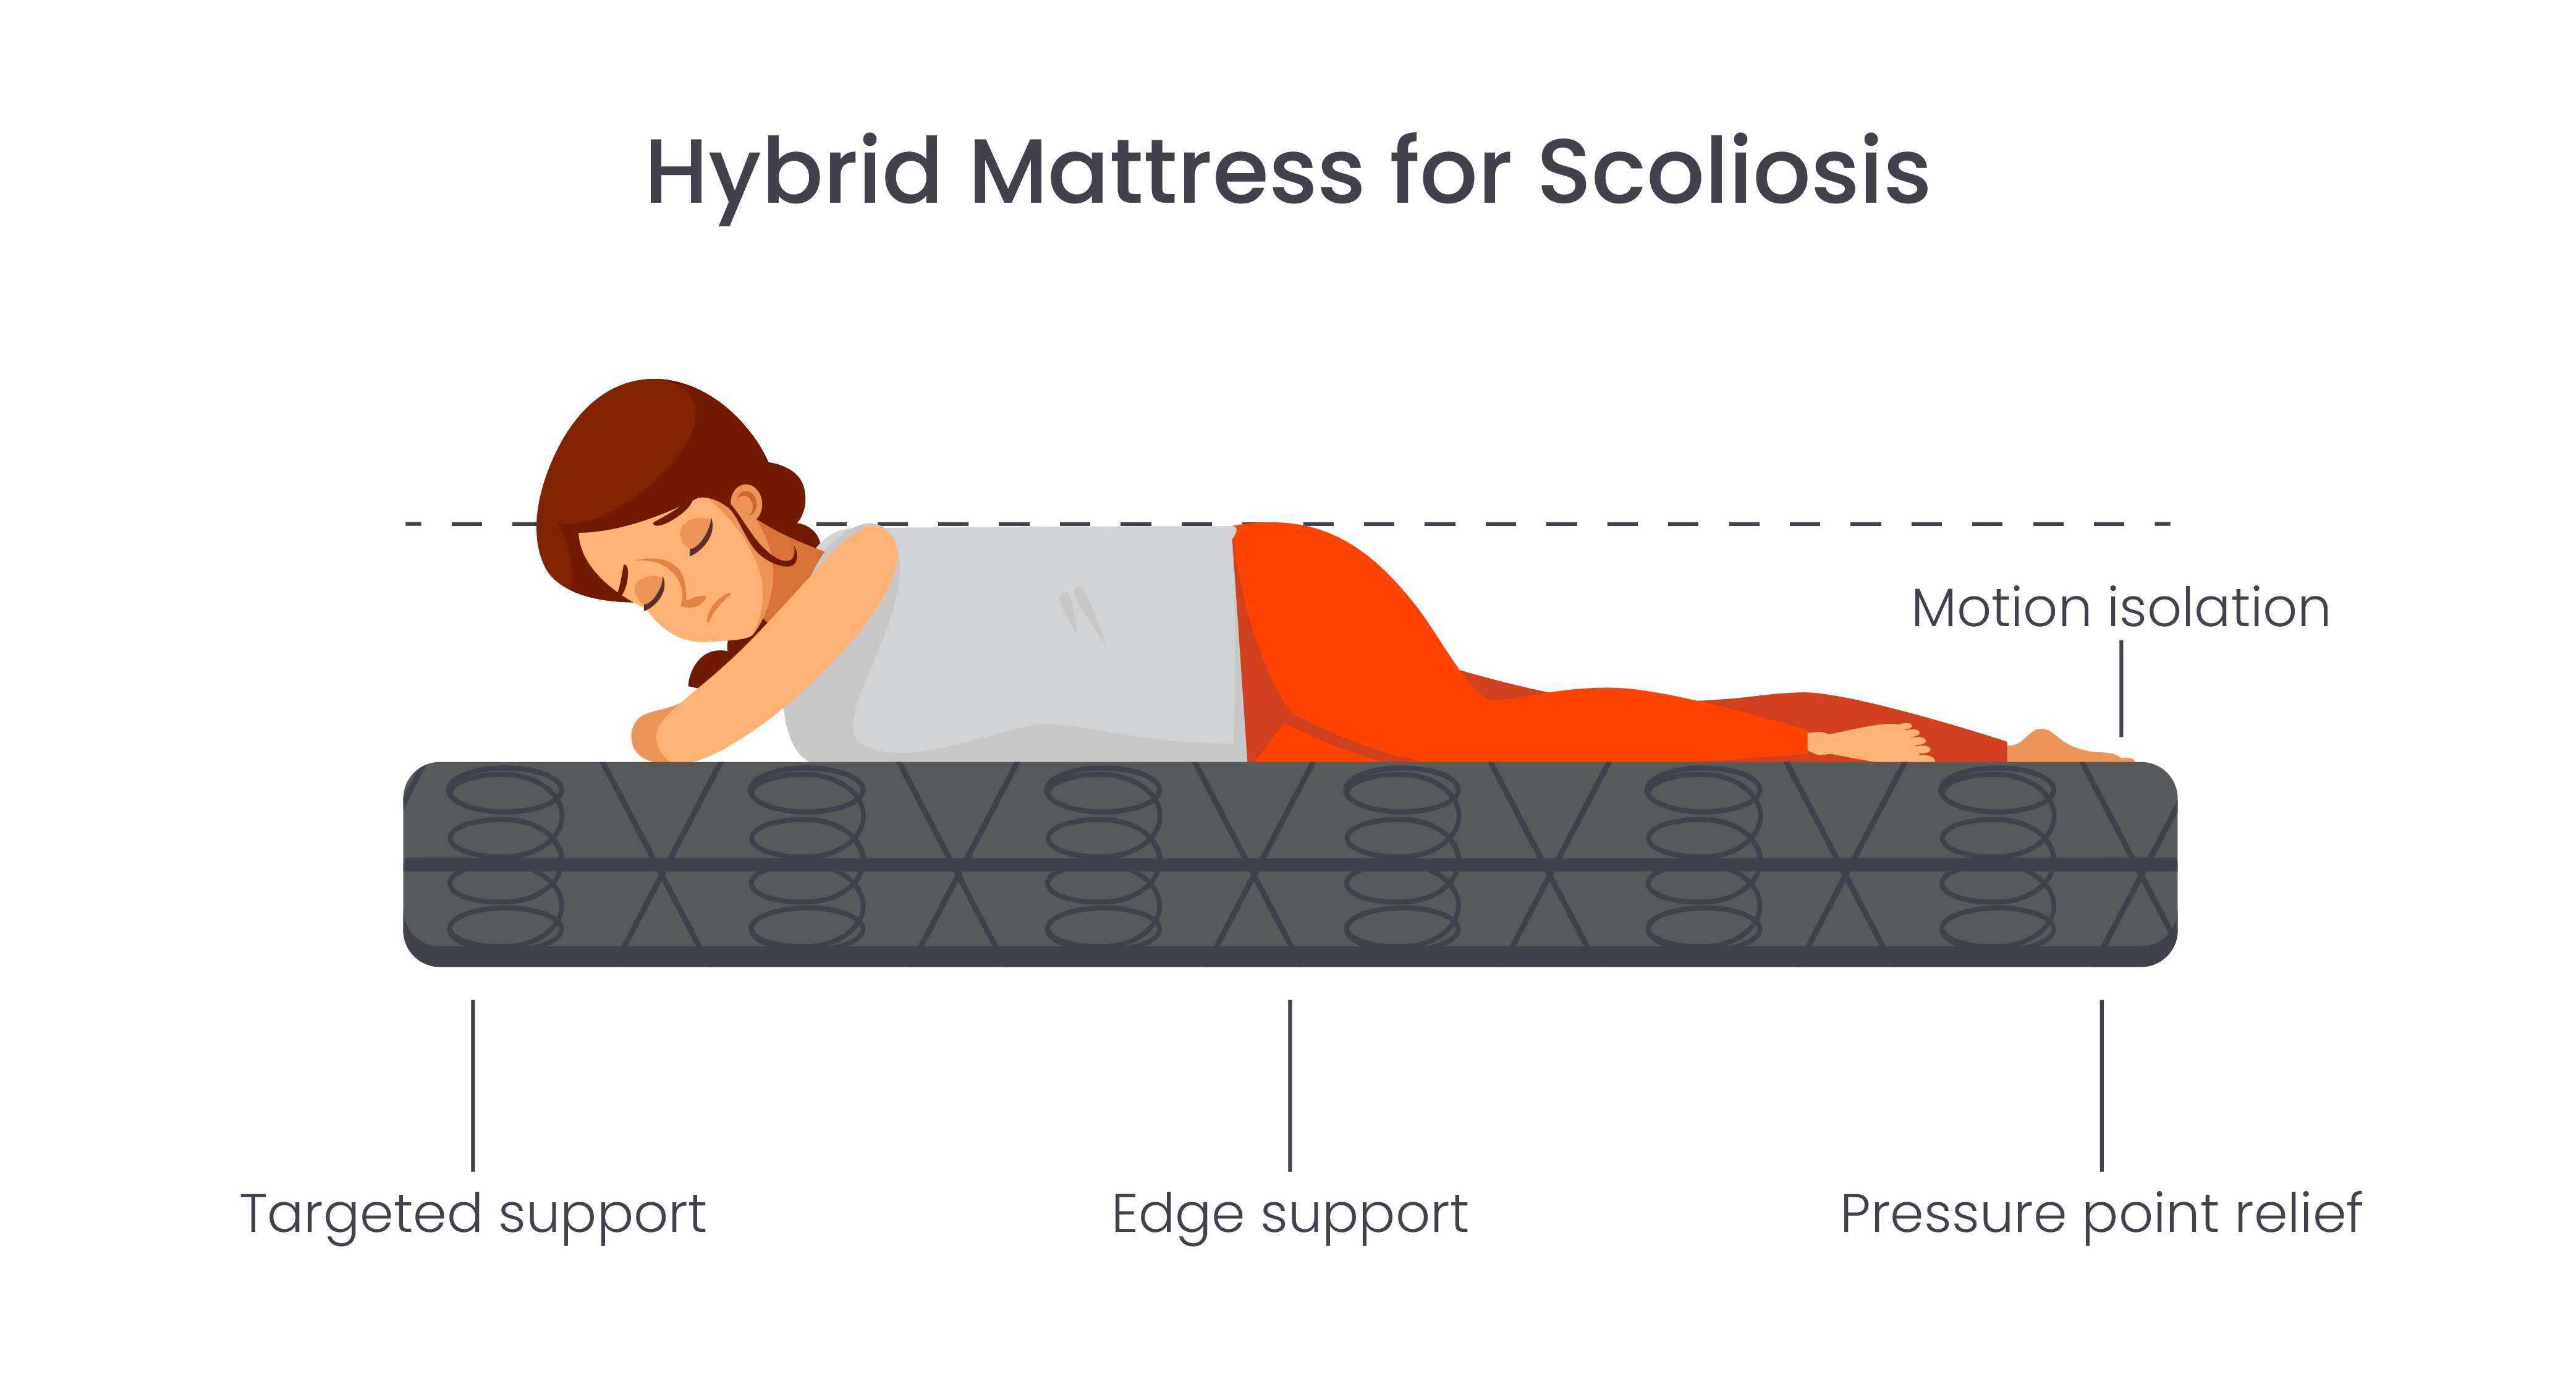 Hybrid mattress for scoliosis